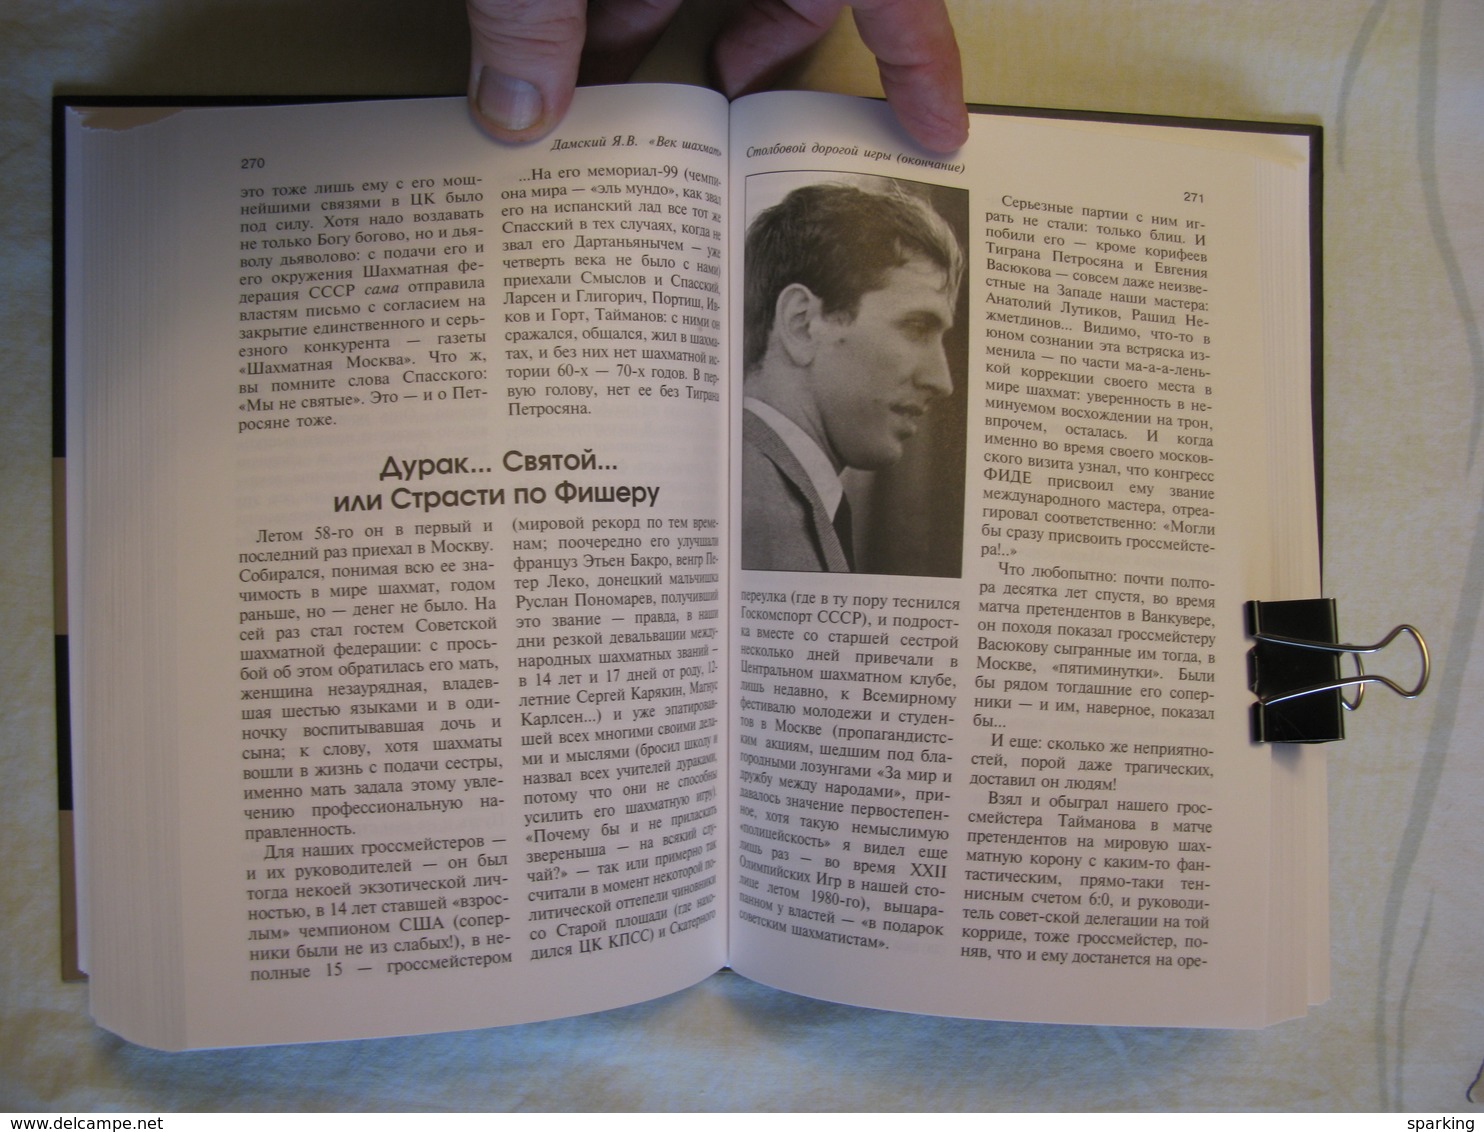 Chess. 2009. Damsky Yakov. A century of chess. Russian book.